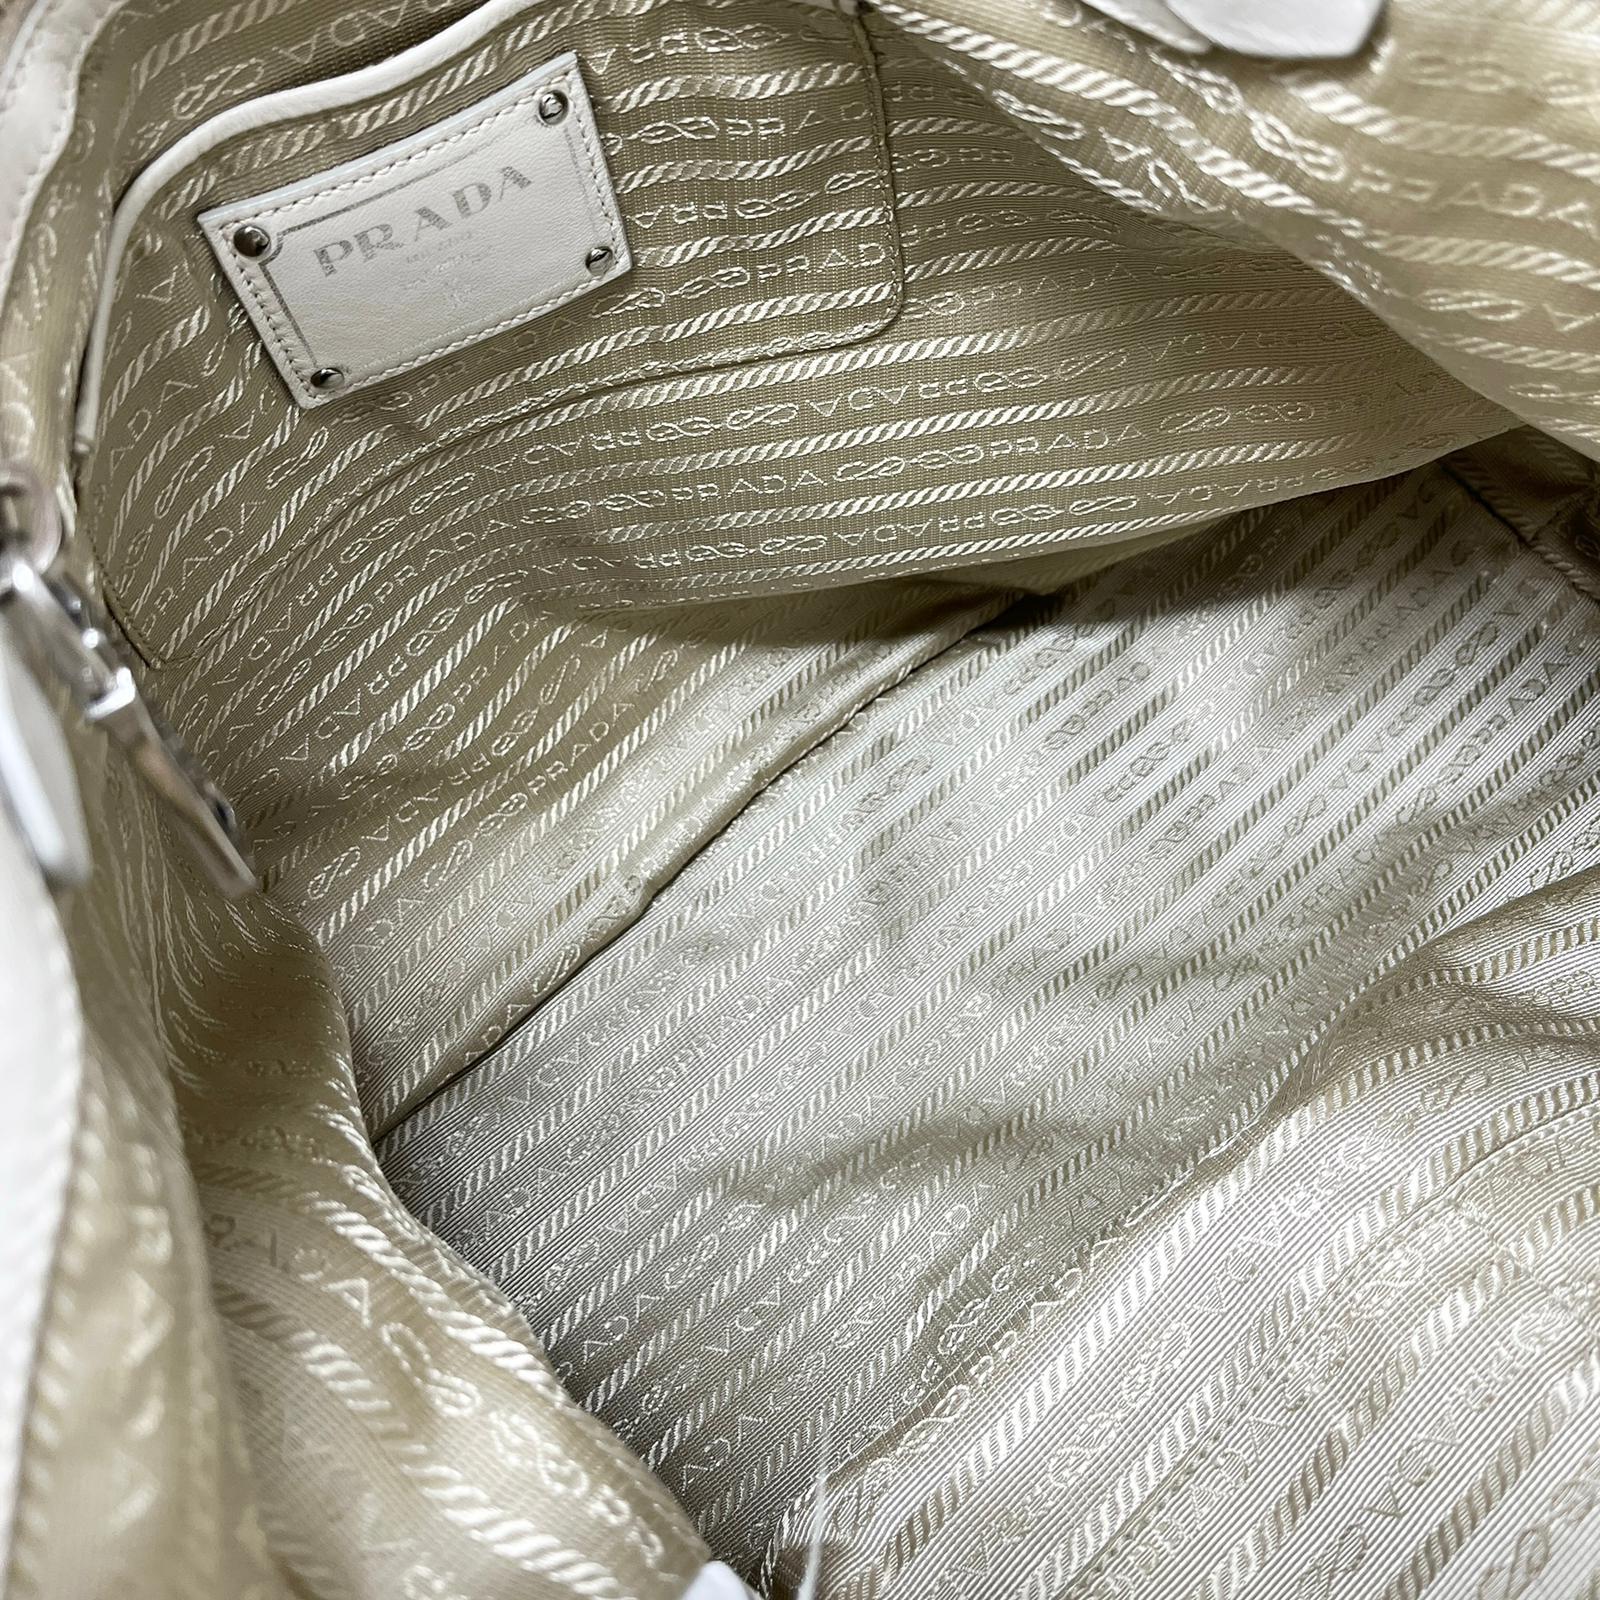 white prada bag